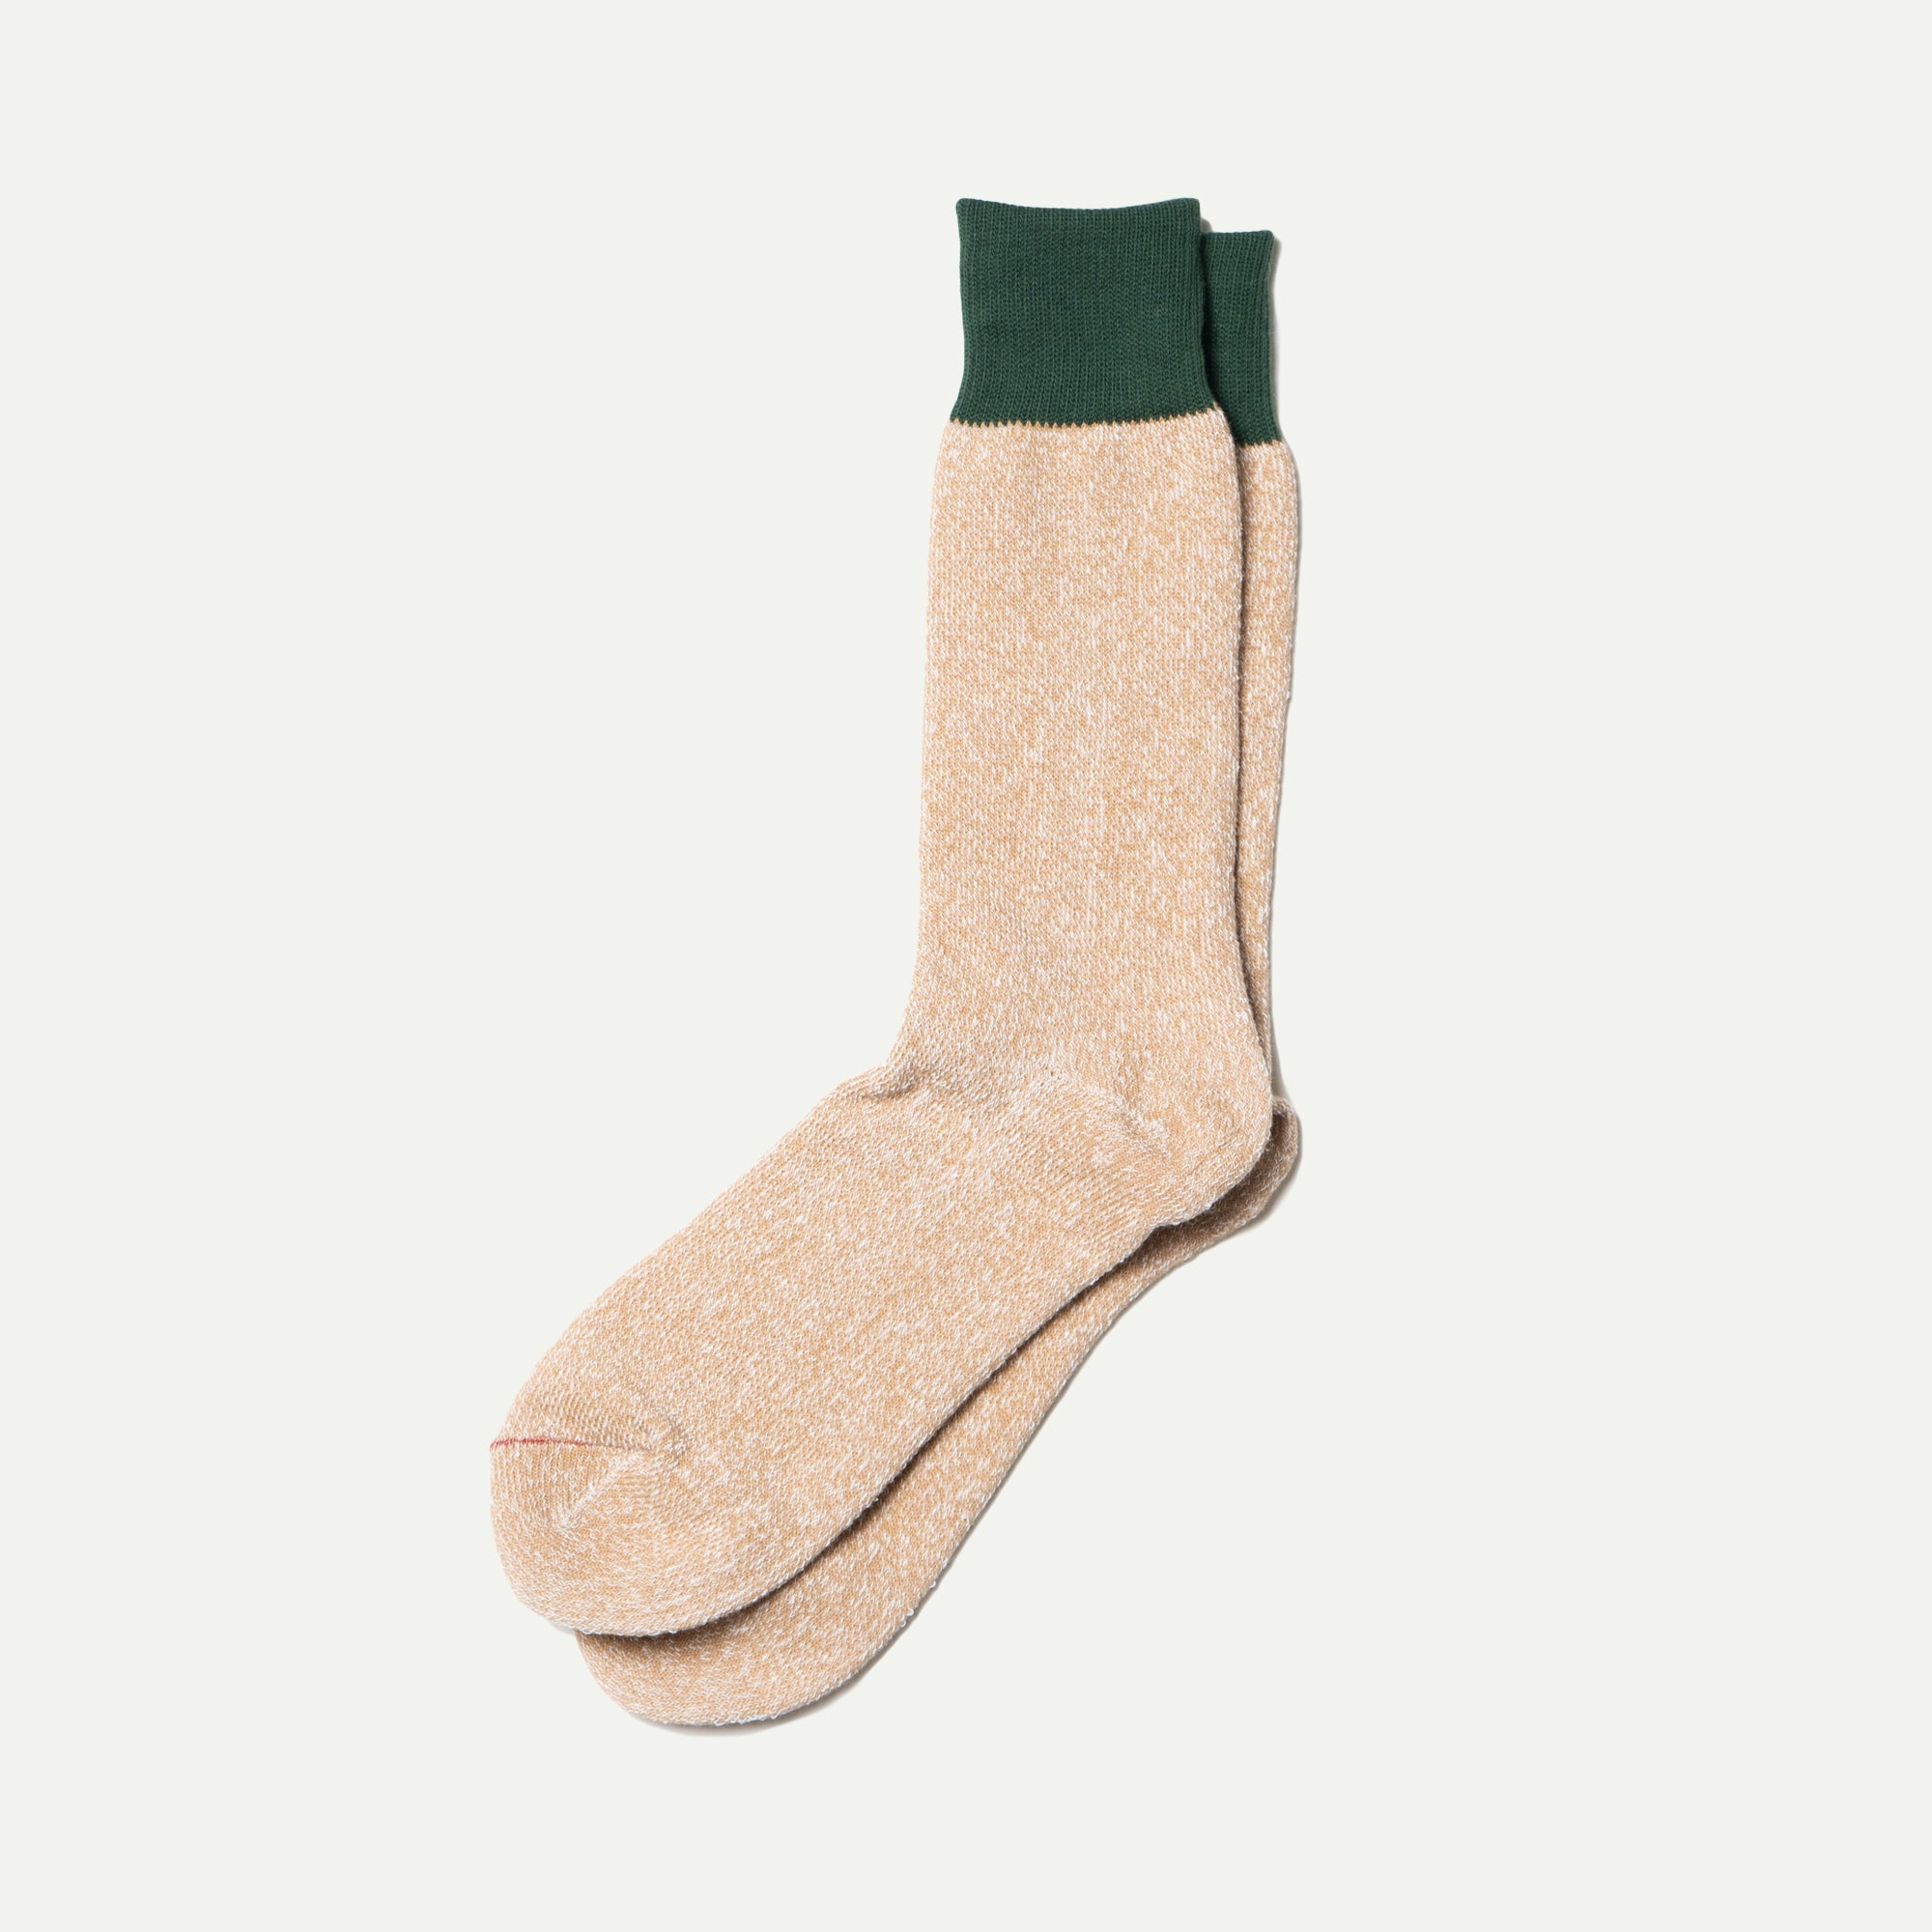 Rototo Beige/Green Double Face Socks